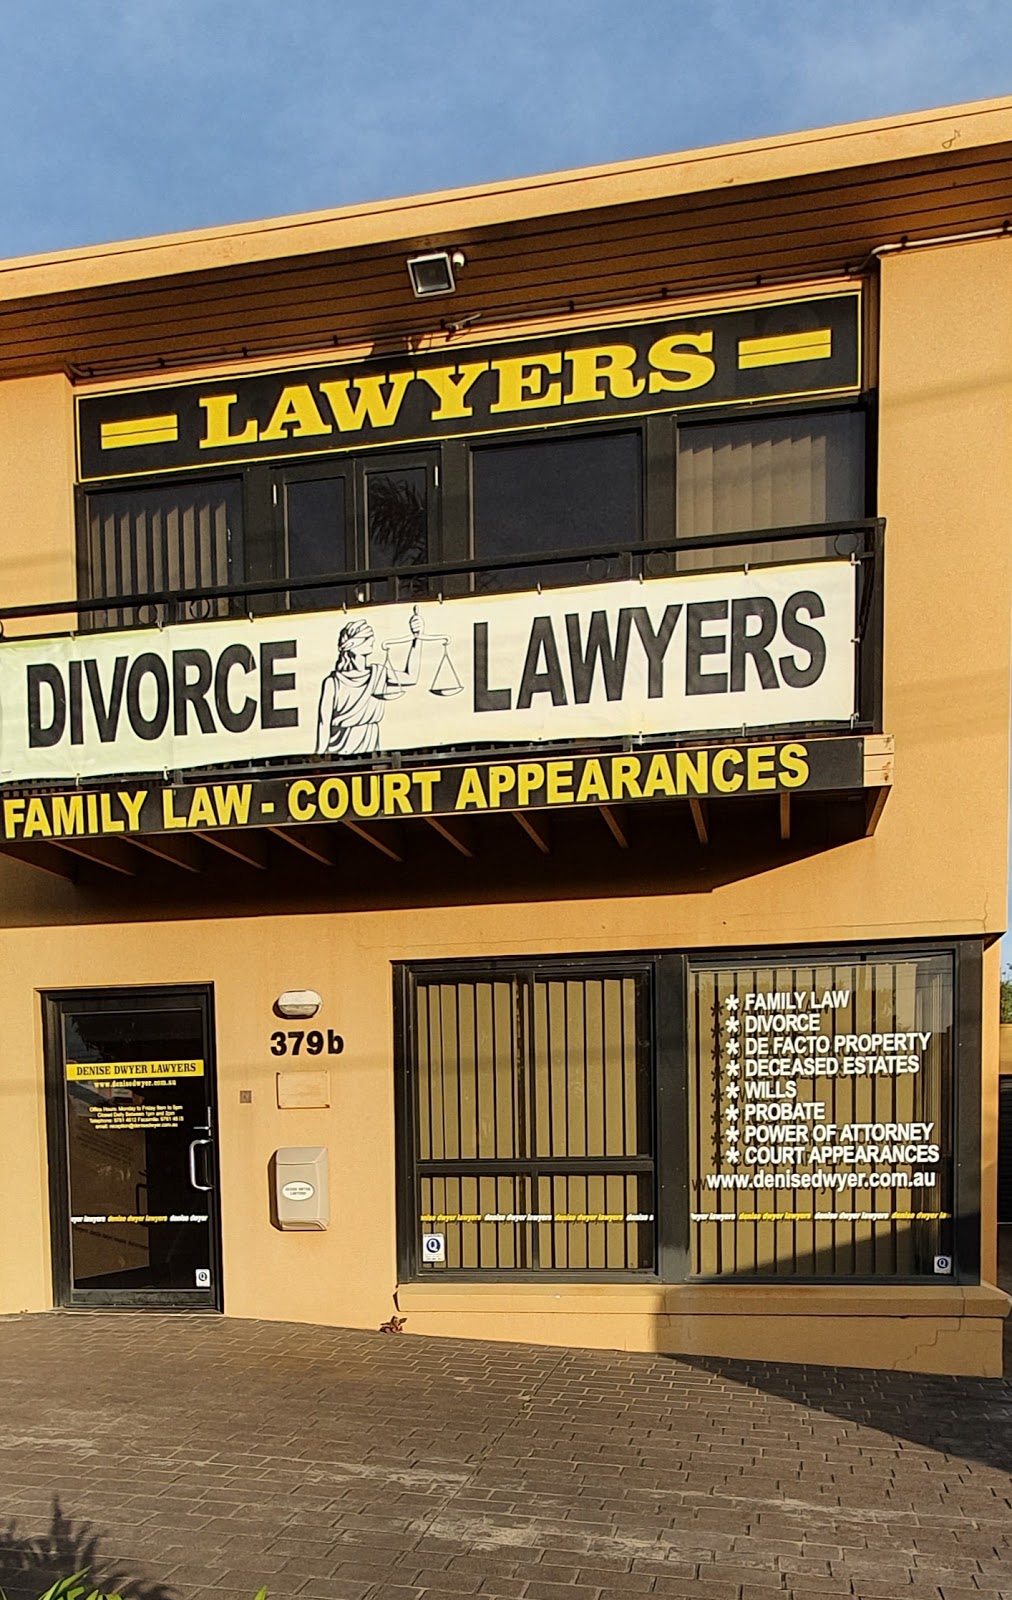 Denise Dwyer Lawyers | lawyer | 379B Nepean Hwy, Frankston VIC 3199, Australia | 0397814612 OR +61 3 9781 4612